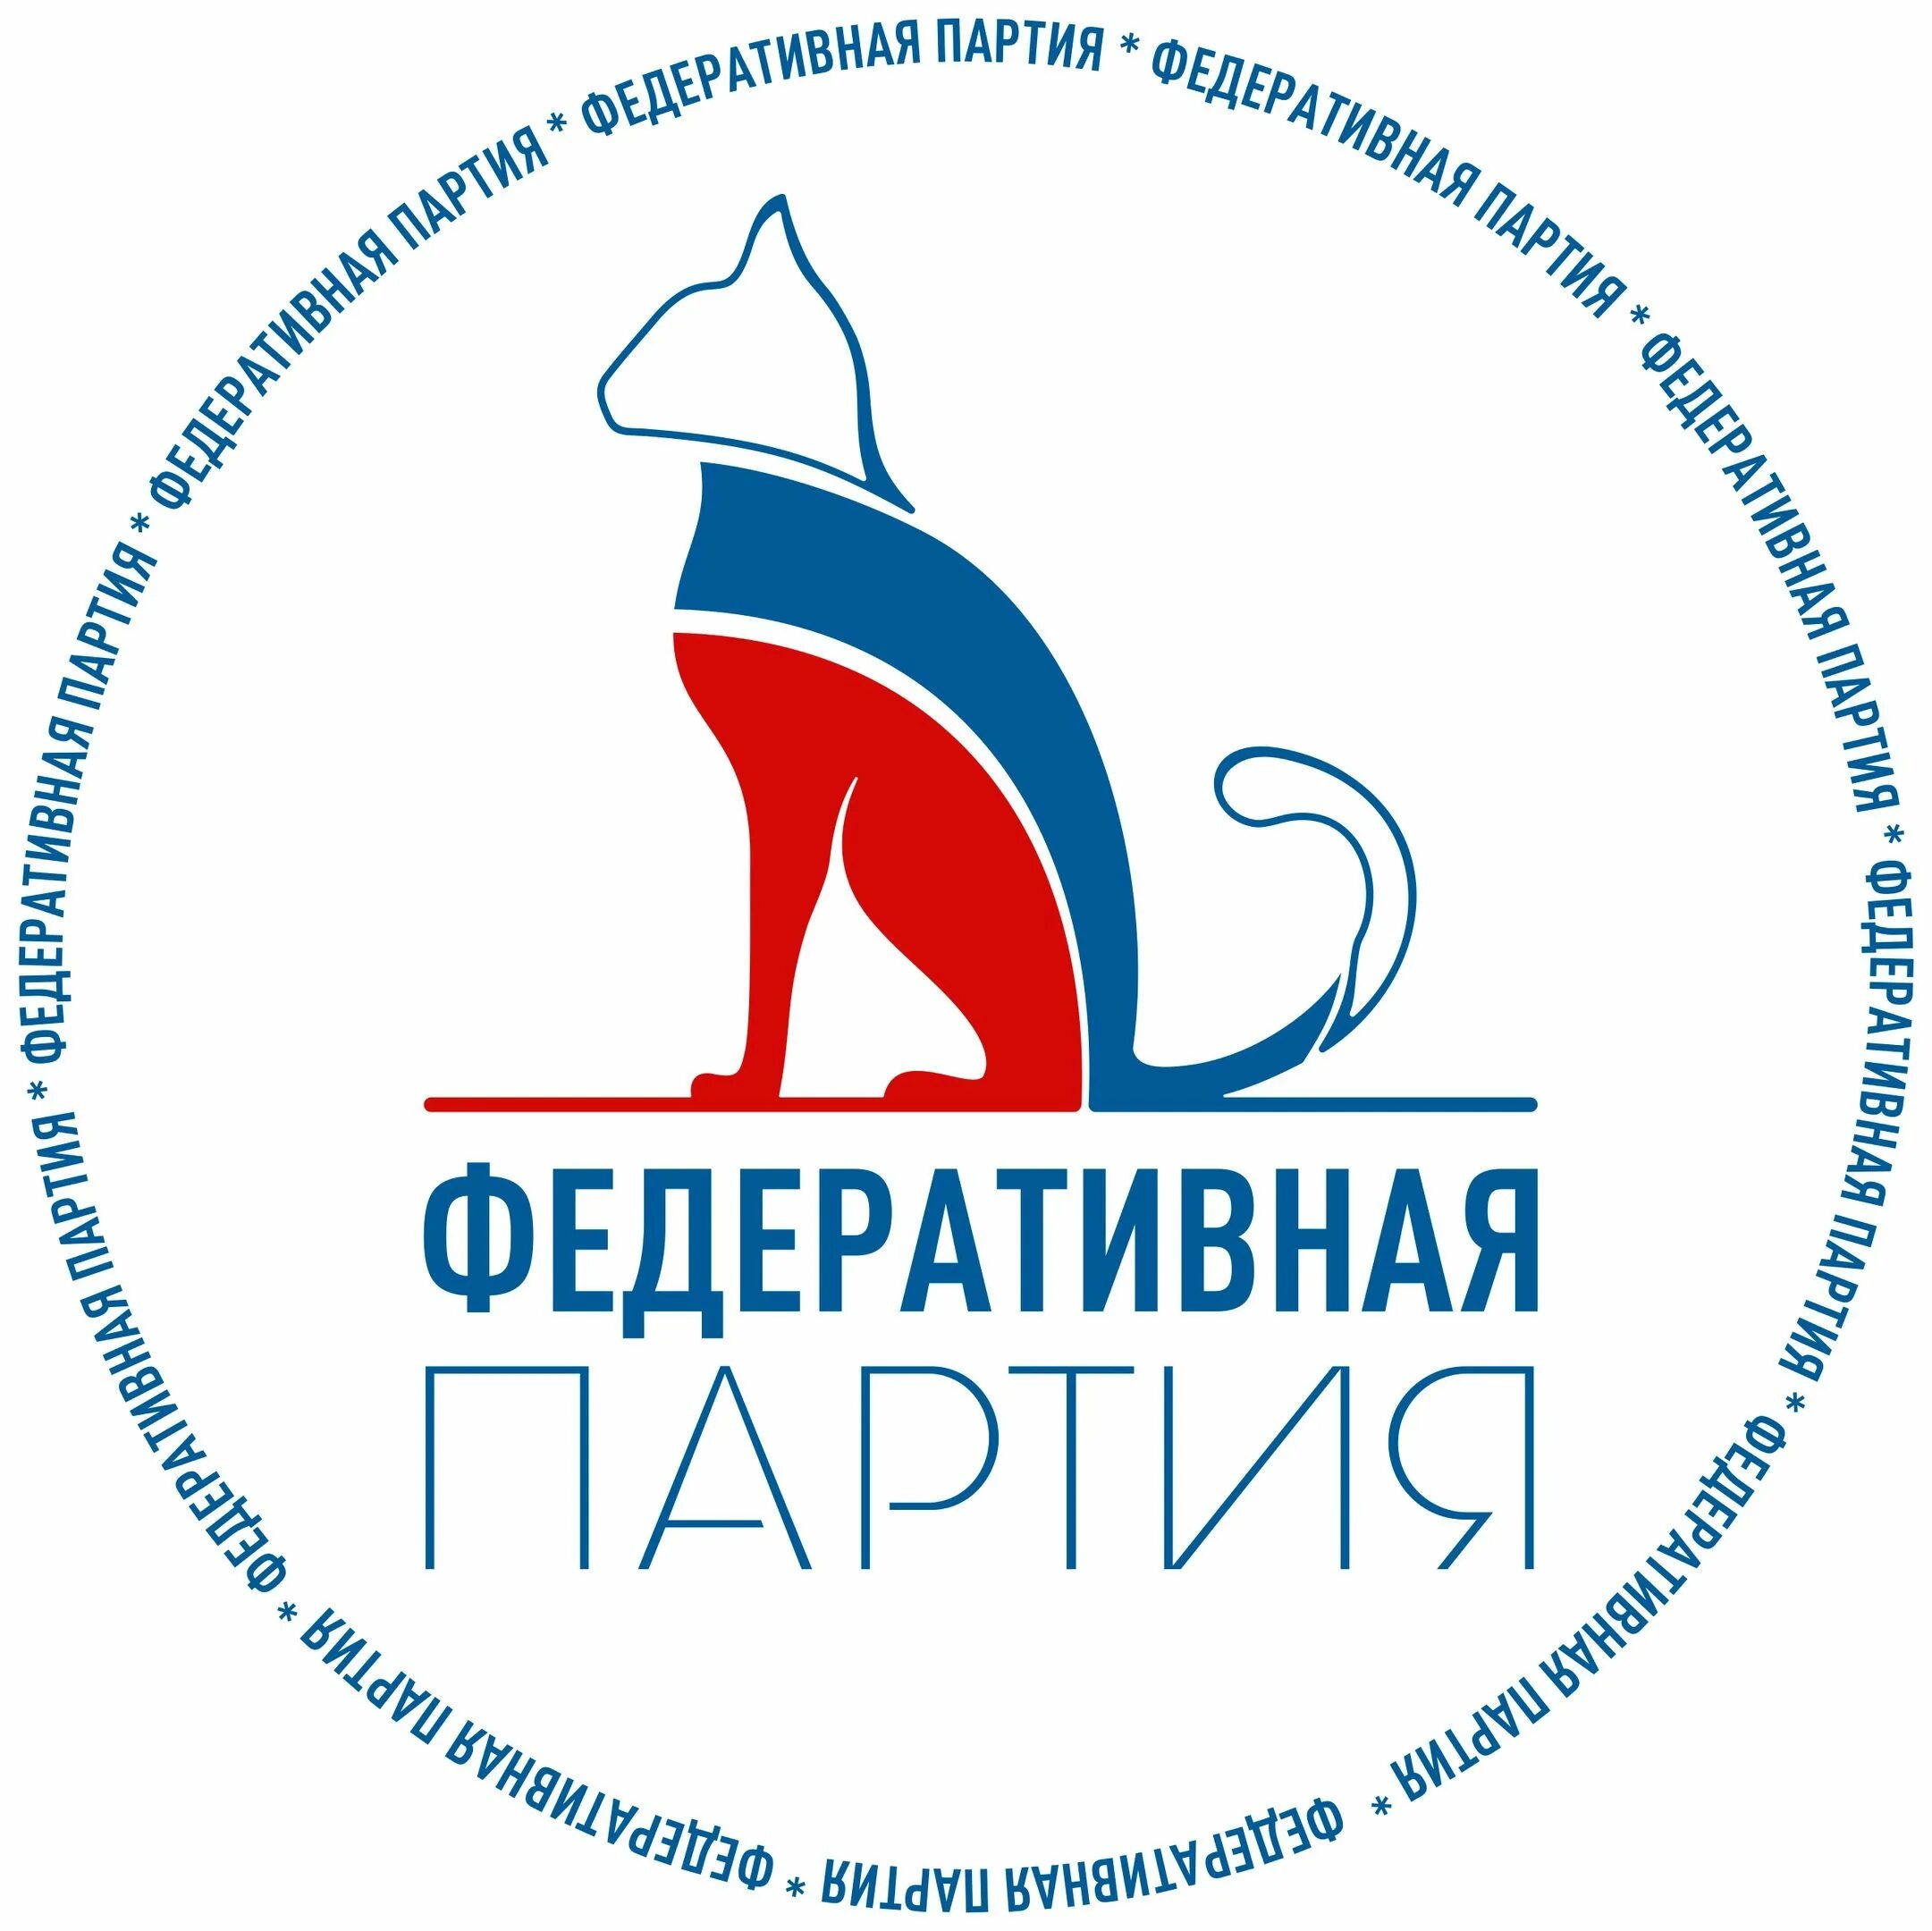 Логотипы партий. Логотипы партий России. Герб партии. Эмблемы политических партий